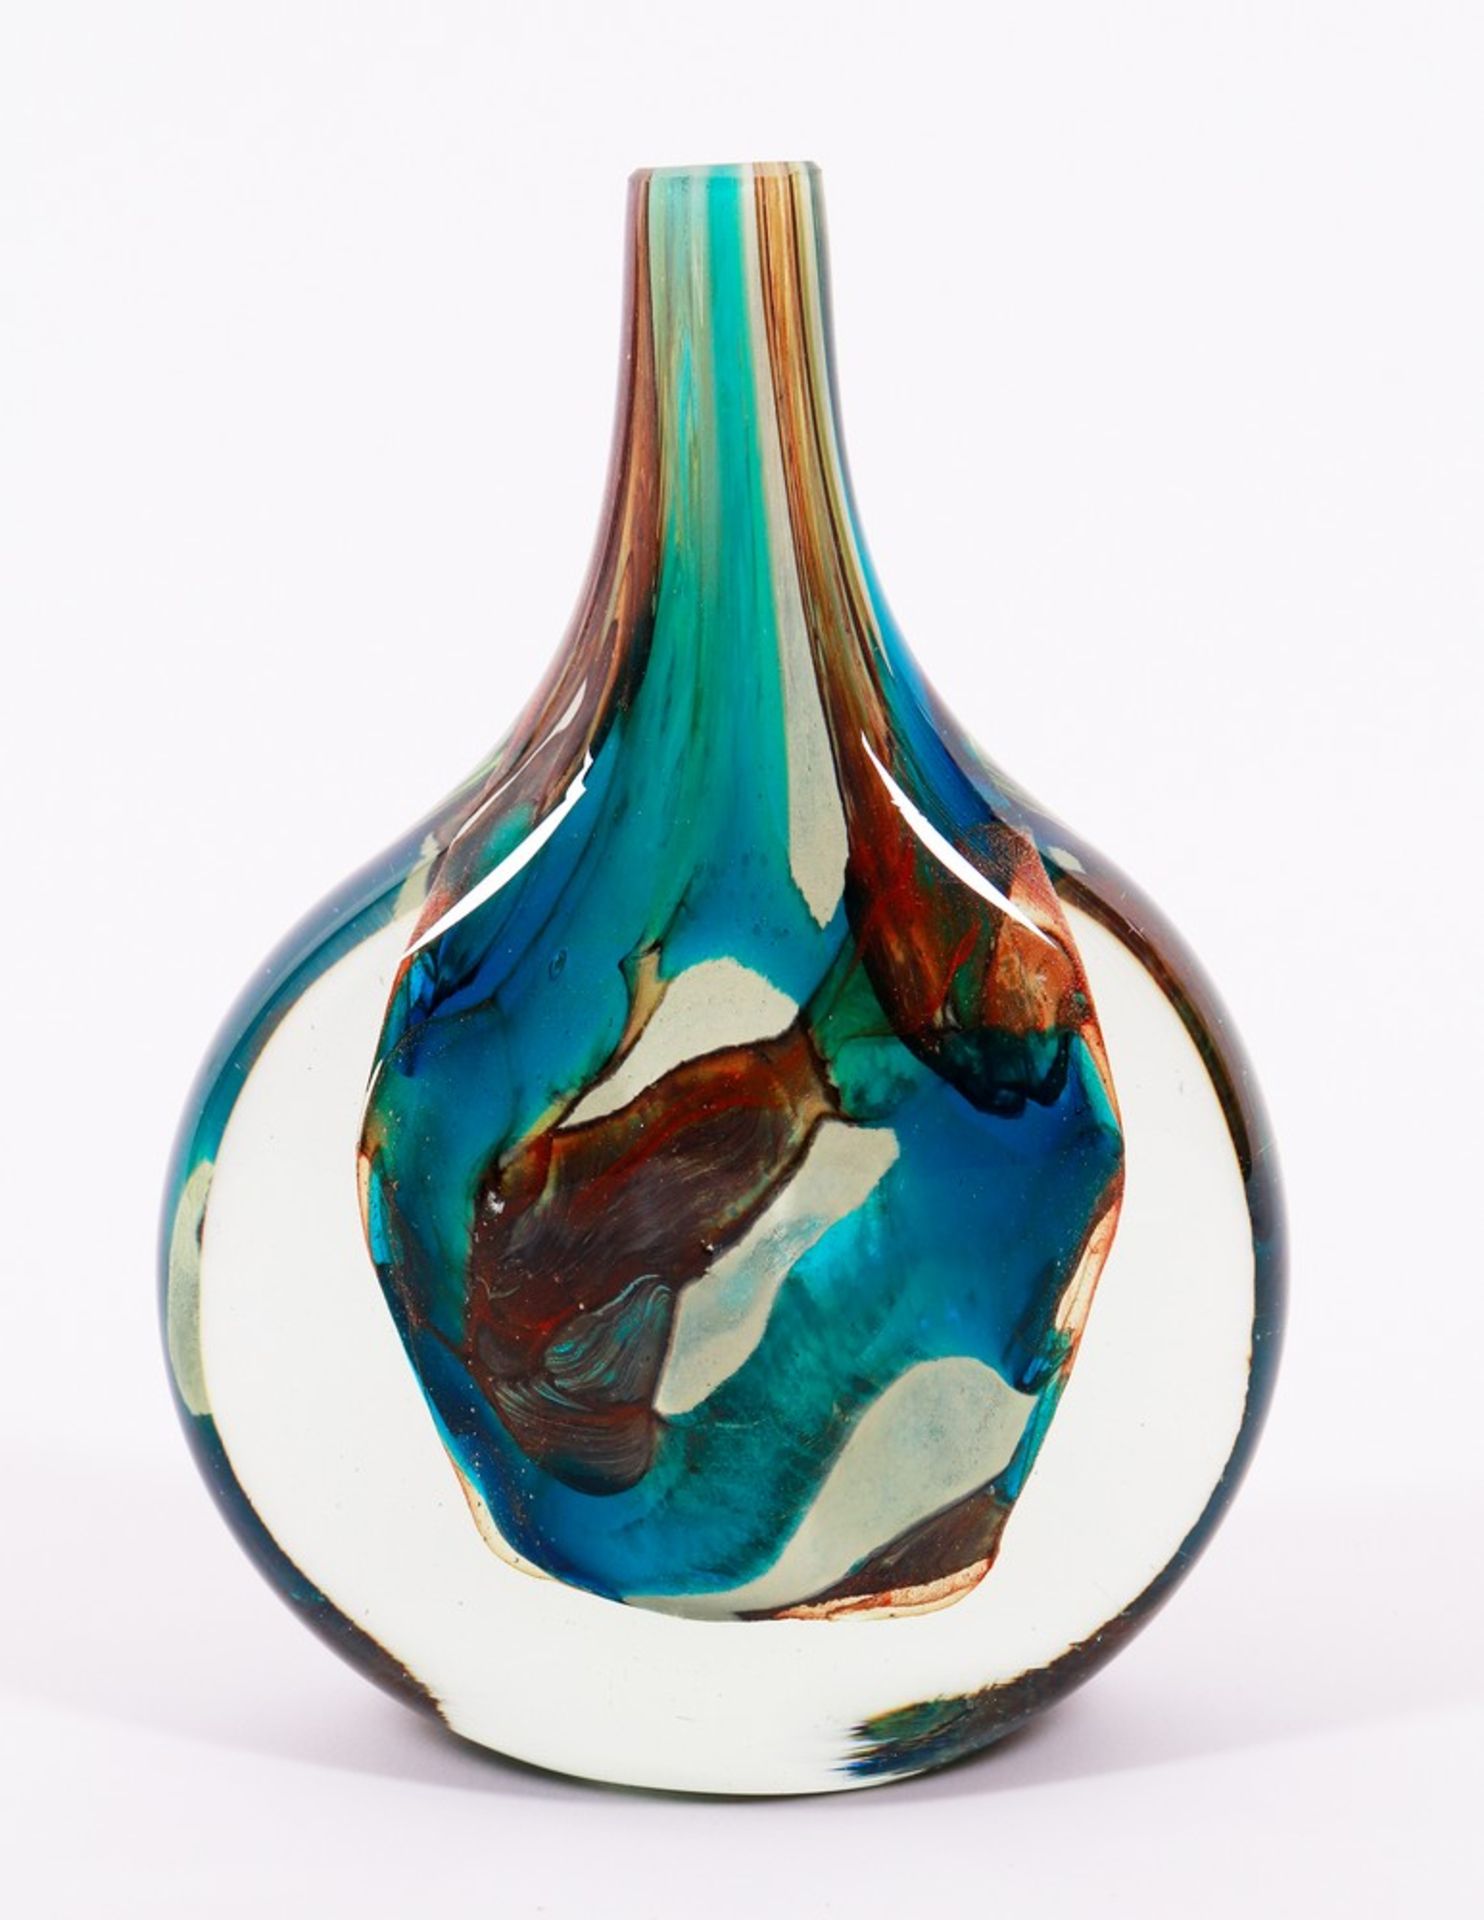 Studio glass vase, design Michael Harris, manufactured by Mdina, Malta, 1980s - Image 4 of 5